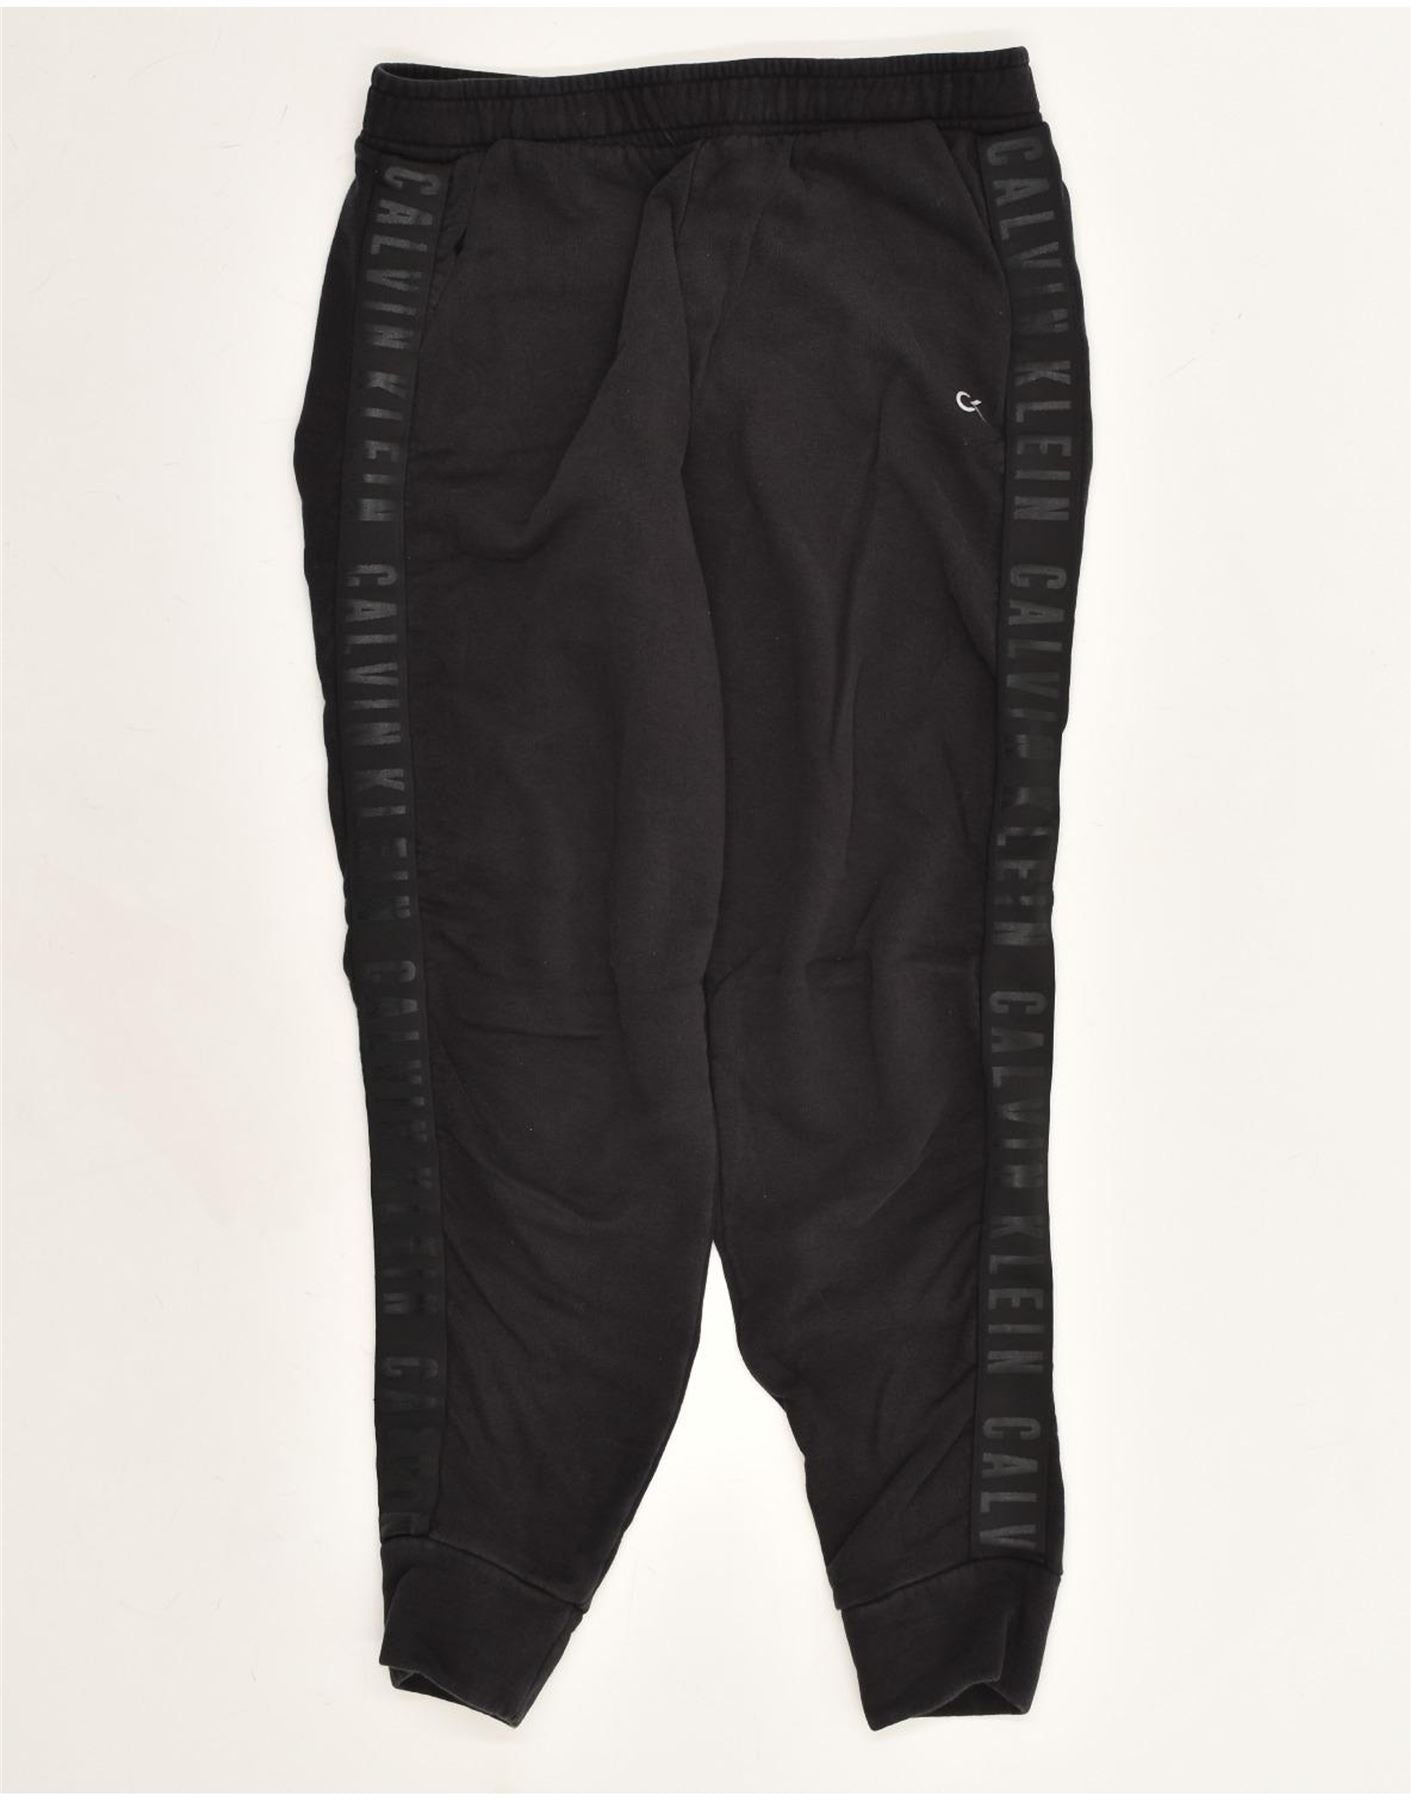 NIKE Womens Dri Fit Tracksuit Trousers UK 8 Small Black Polyester